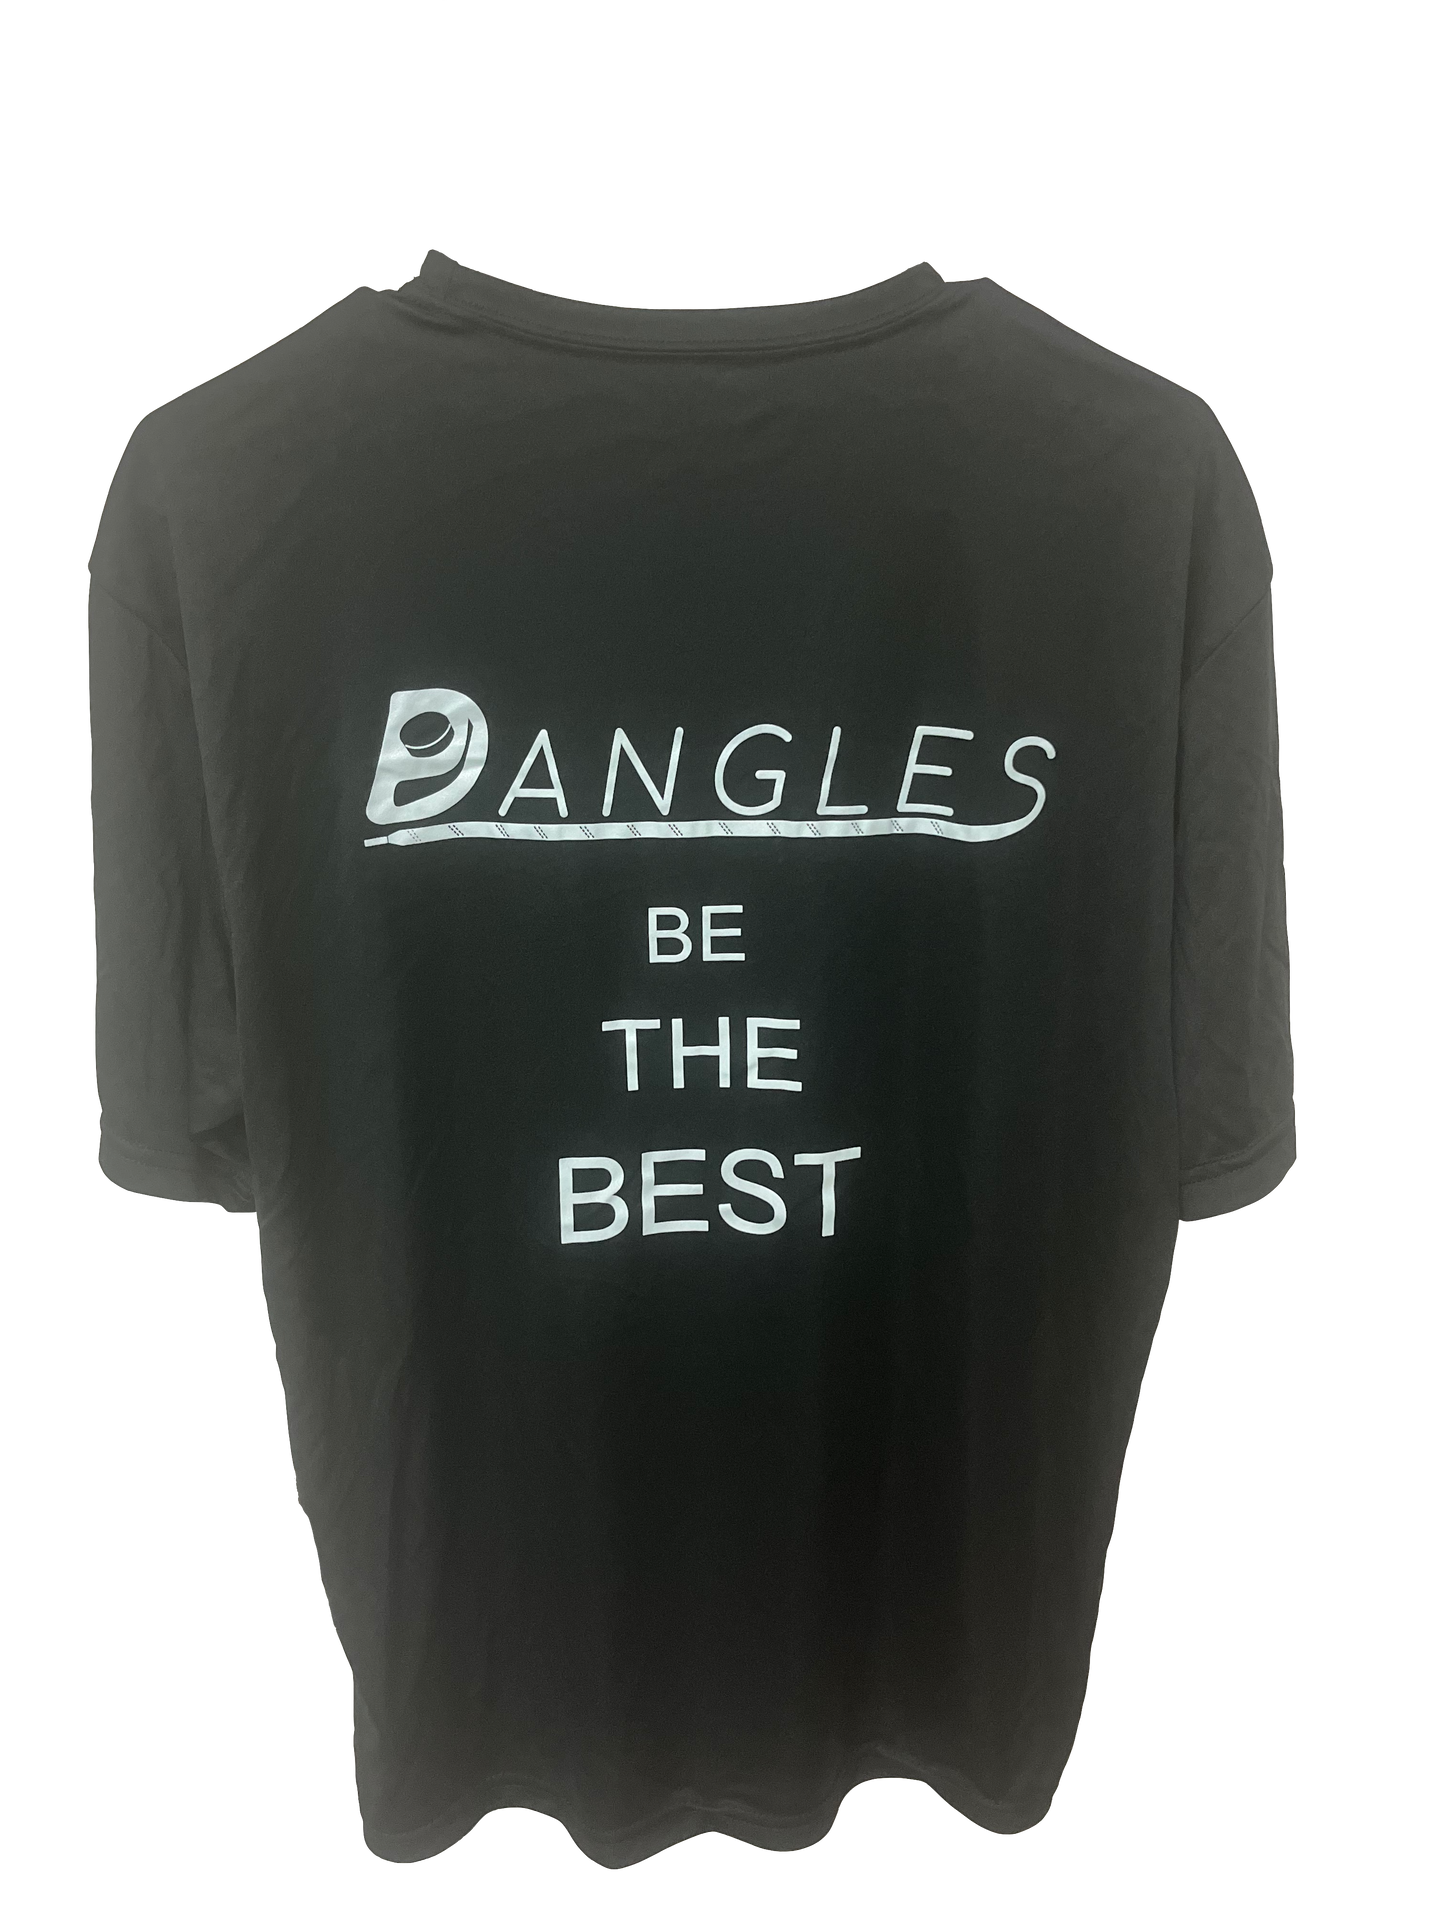 Dangles Short Sleeve (Be The Best)